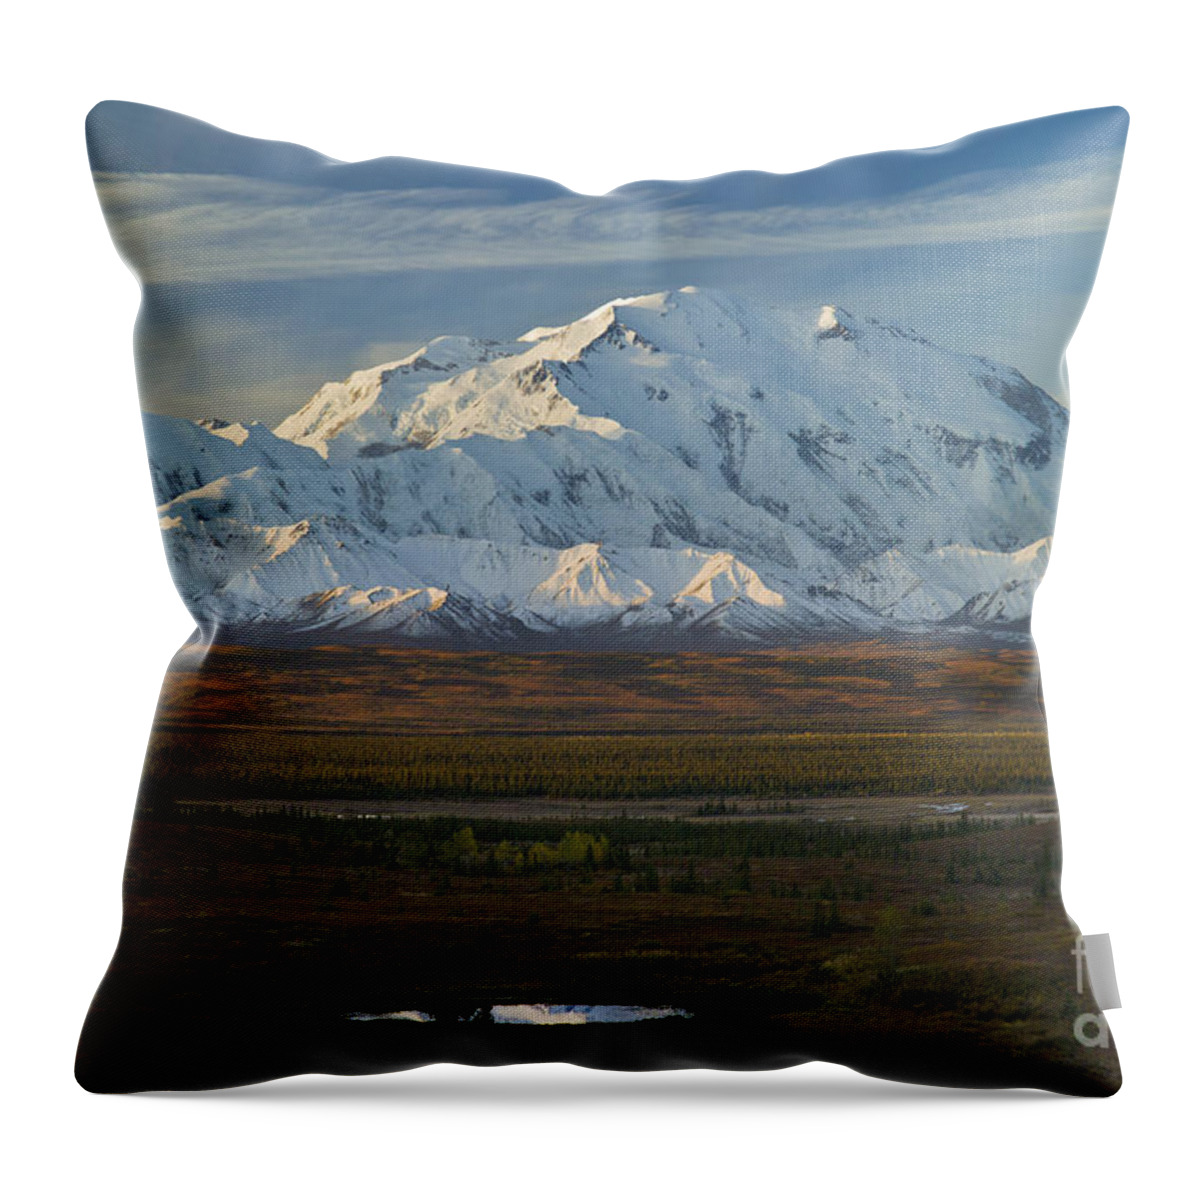 Alaska Mountain Throw Pillow featuring the photograph Mt. Mckinley In Autumn #1 by John Shaw